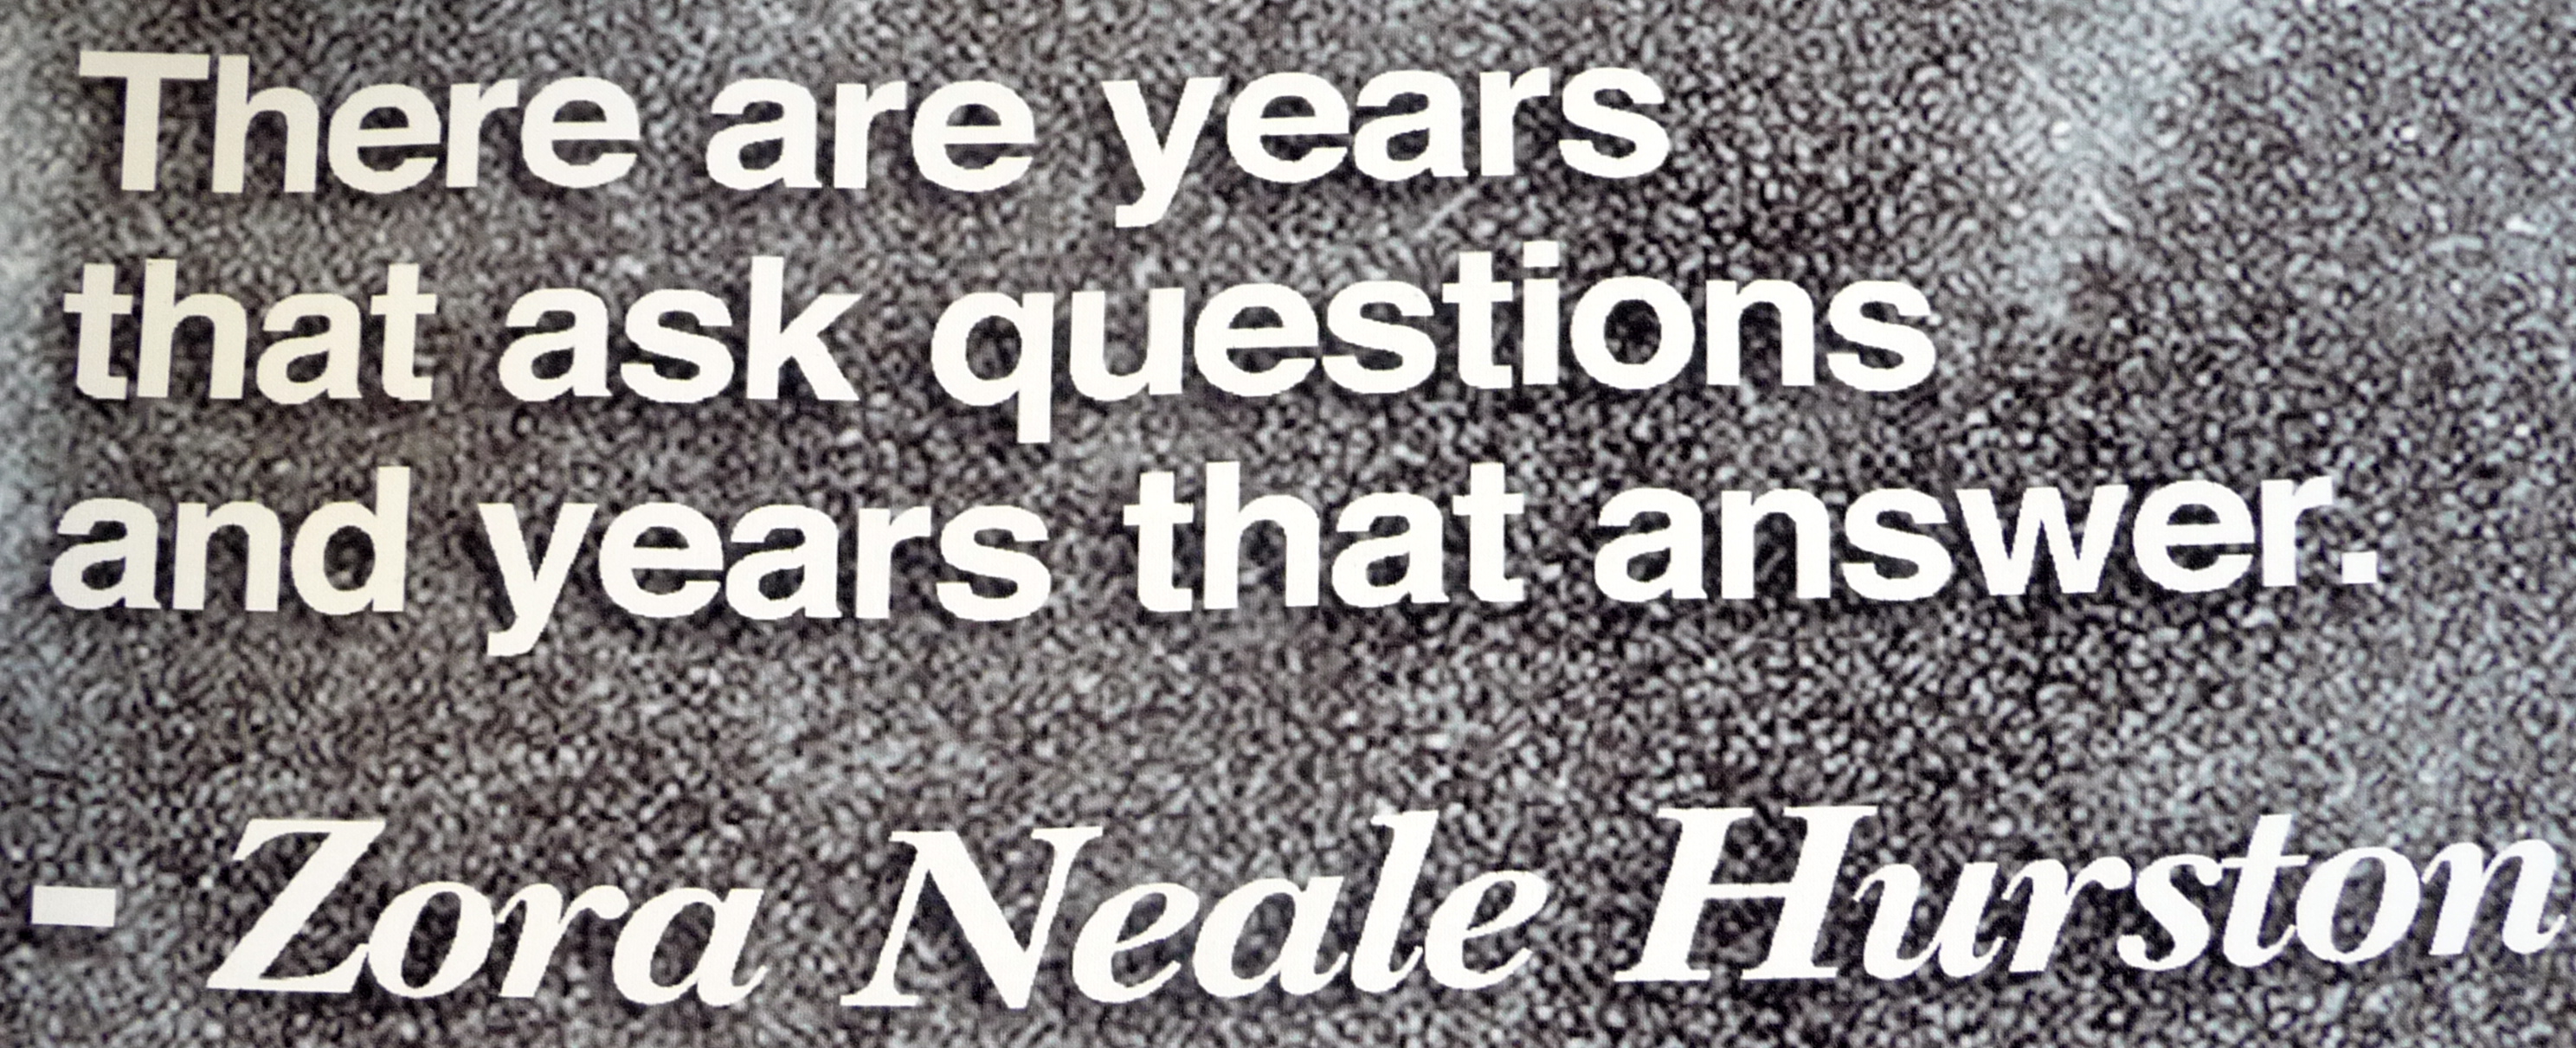 Zora Neale Hurston's quote #7